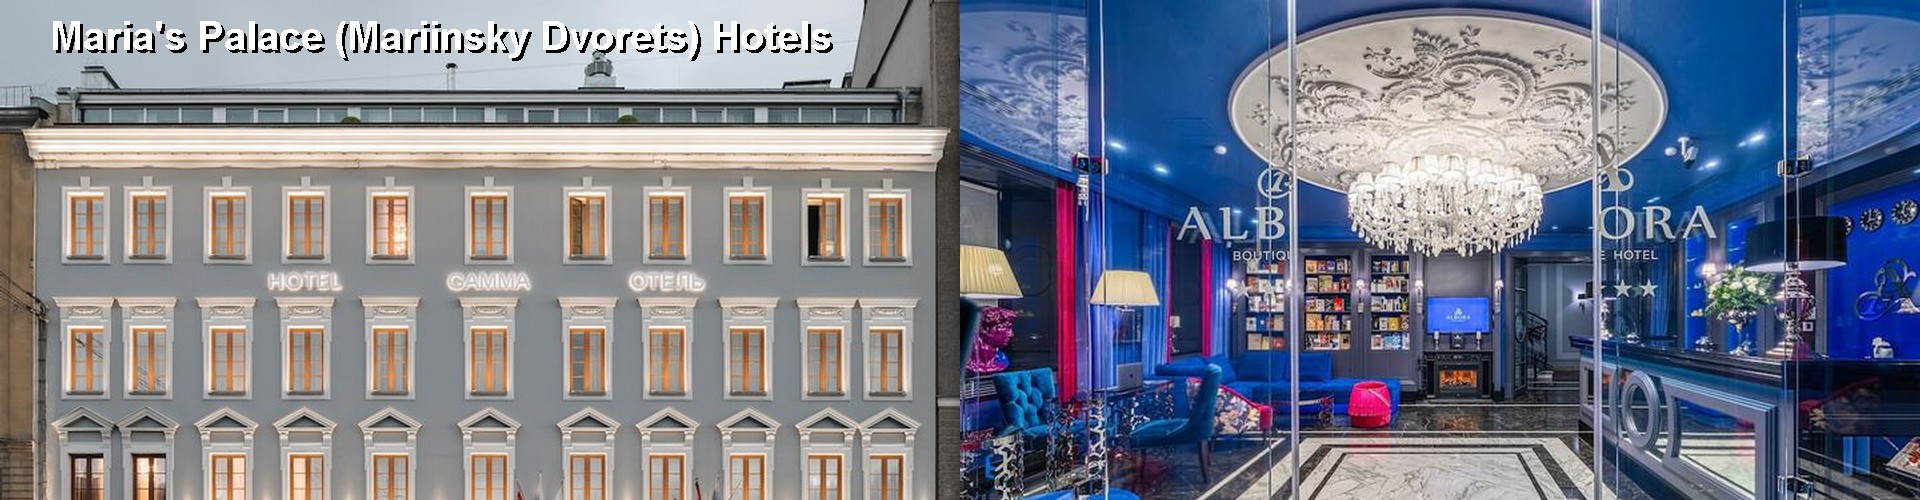 5 Best Hotels near Maria's Palace (Mariinsky Dvorets)